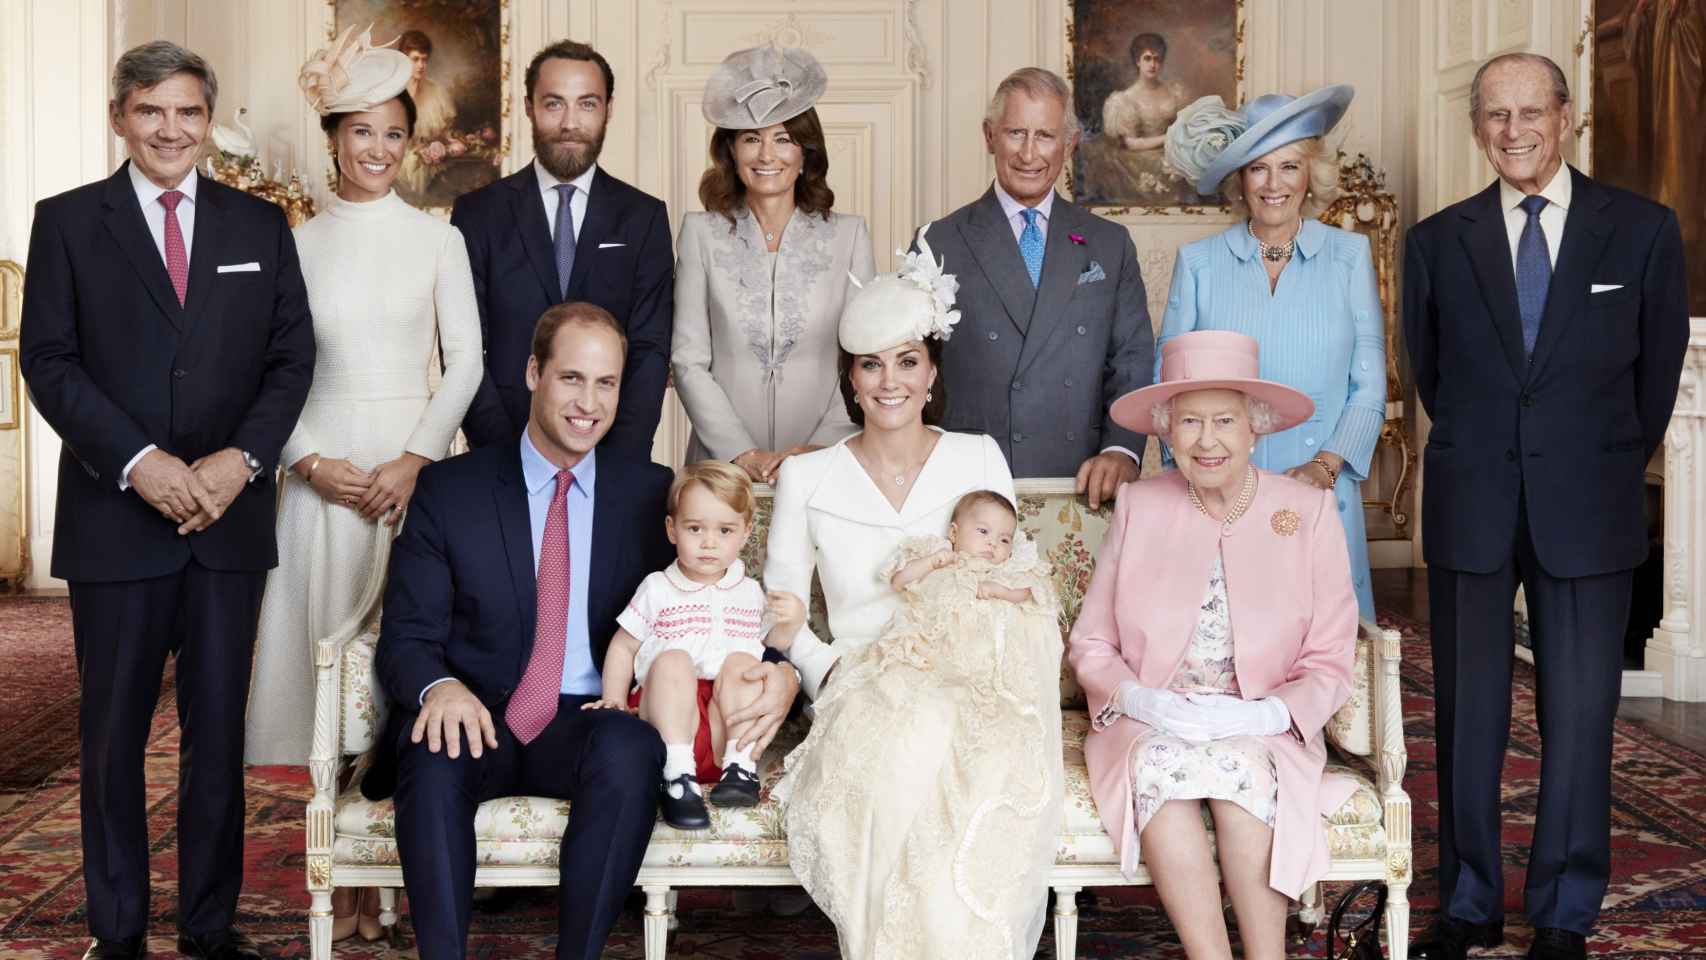 La familia Middleton y los Windsor en el bautizo de la princesa Charlotte.